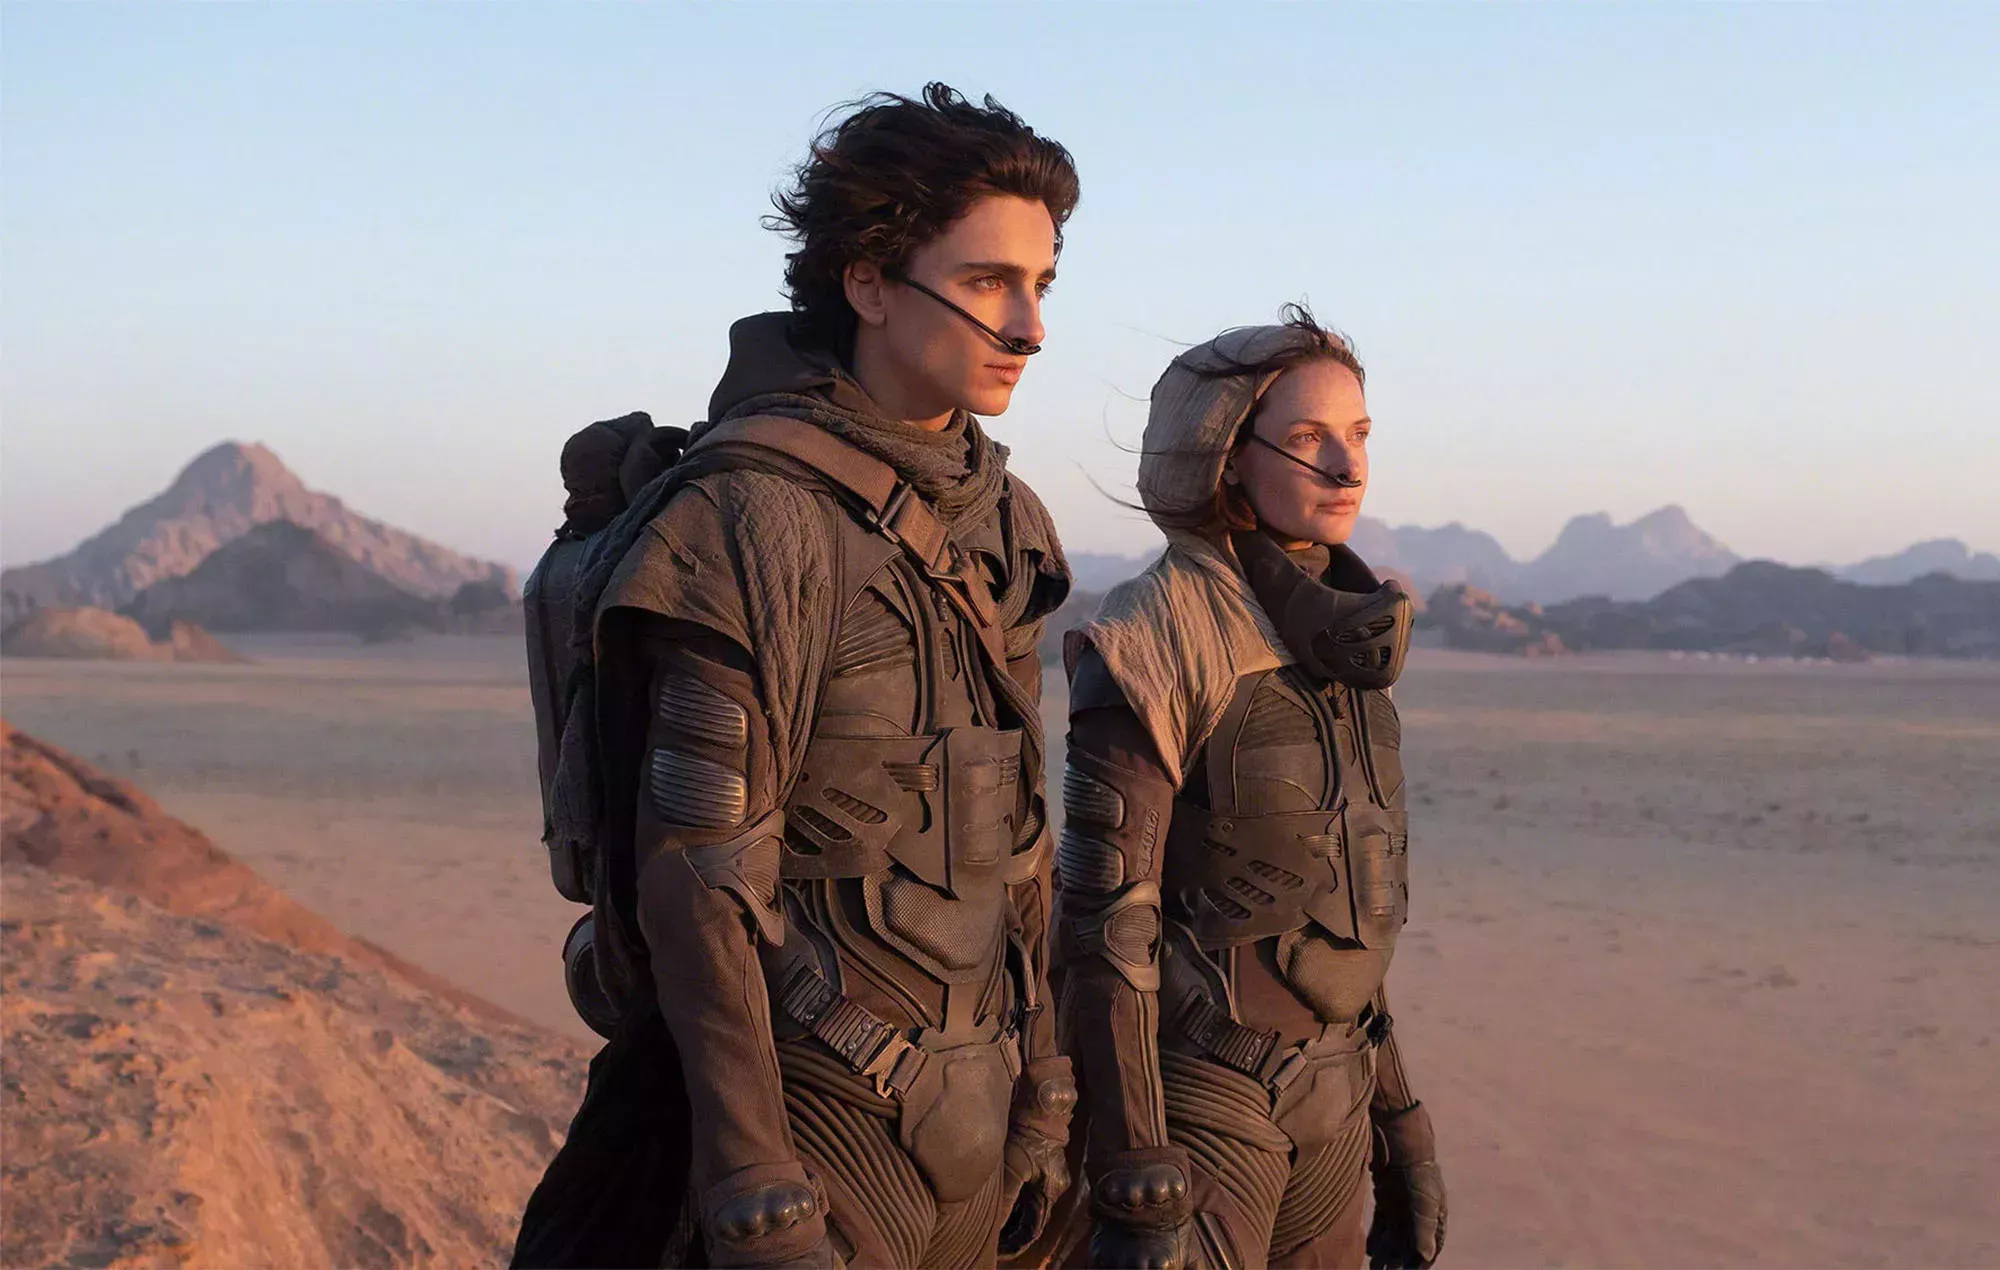 Se está desarrollando una serie animada de Dune, según un grupo de criptomonedas